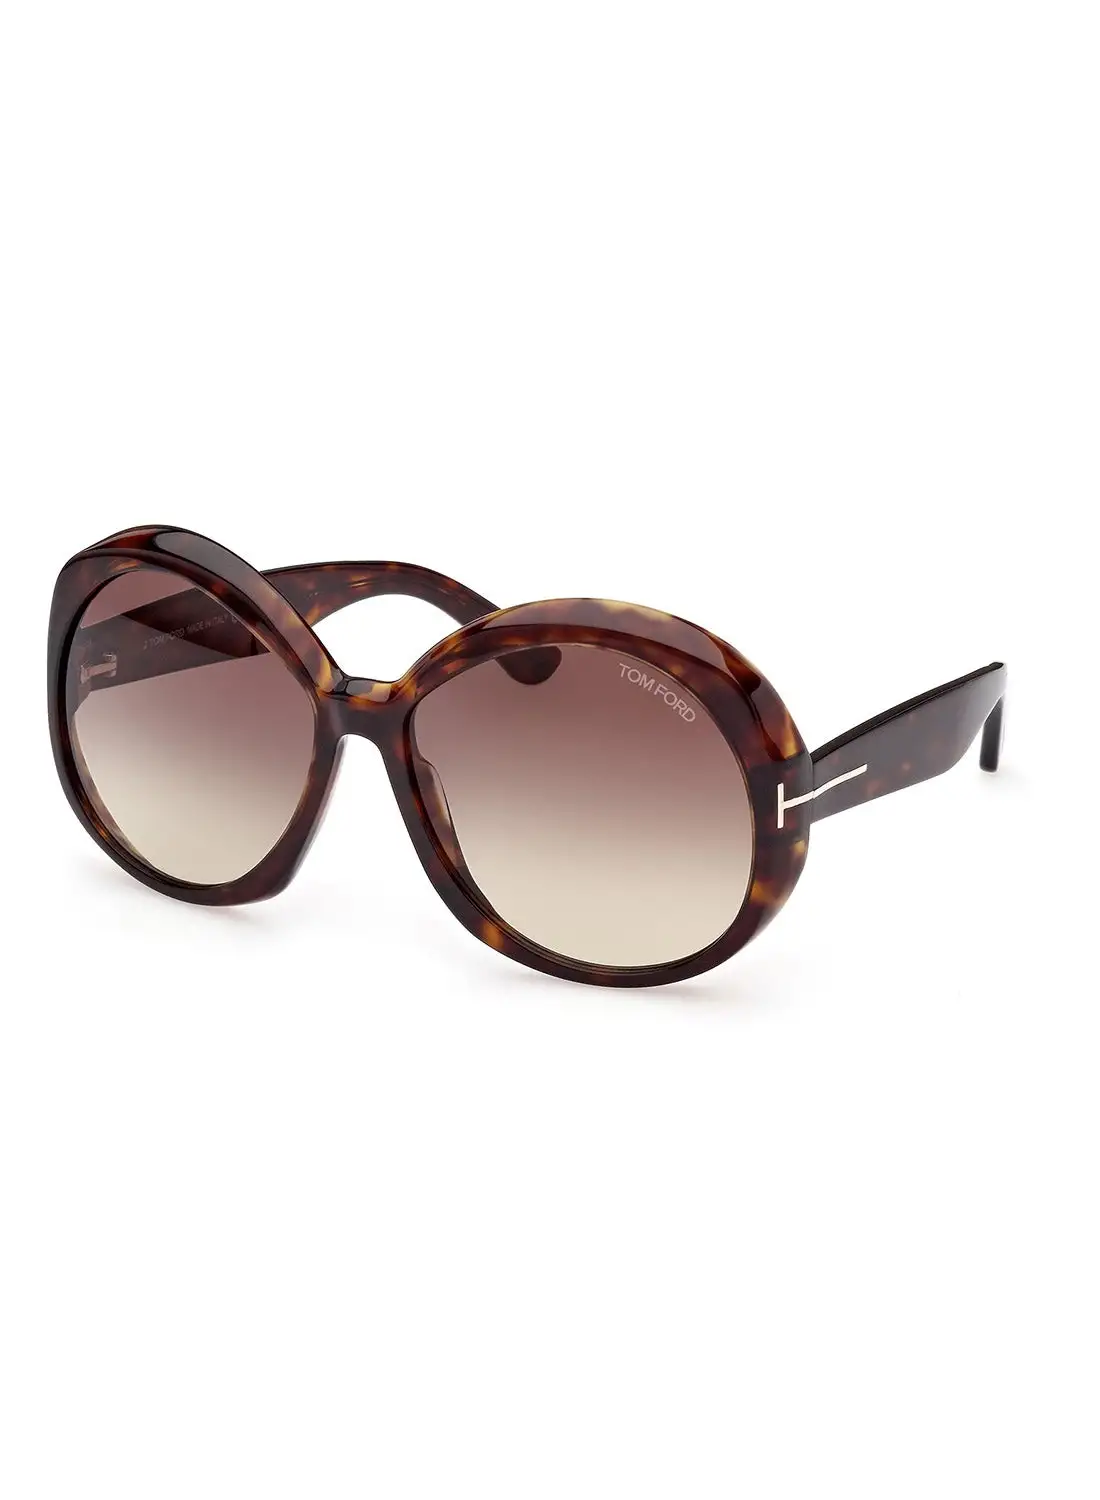 TOM FORD Women's UV Protection Round Sunglasses - FT101052B62 - Lens Size: 62 Mm